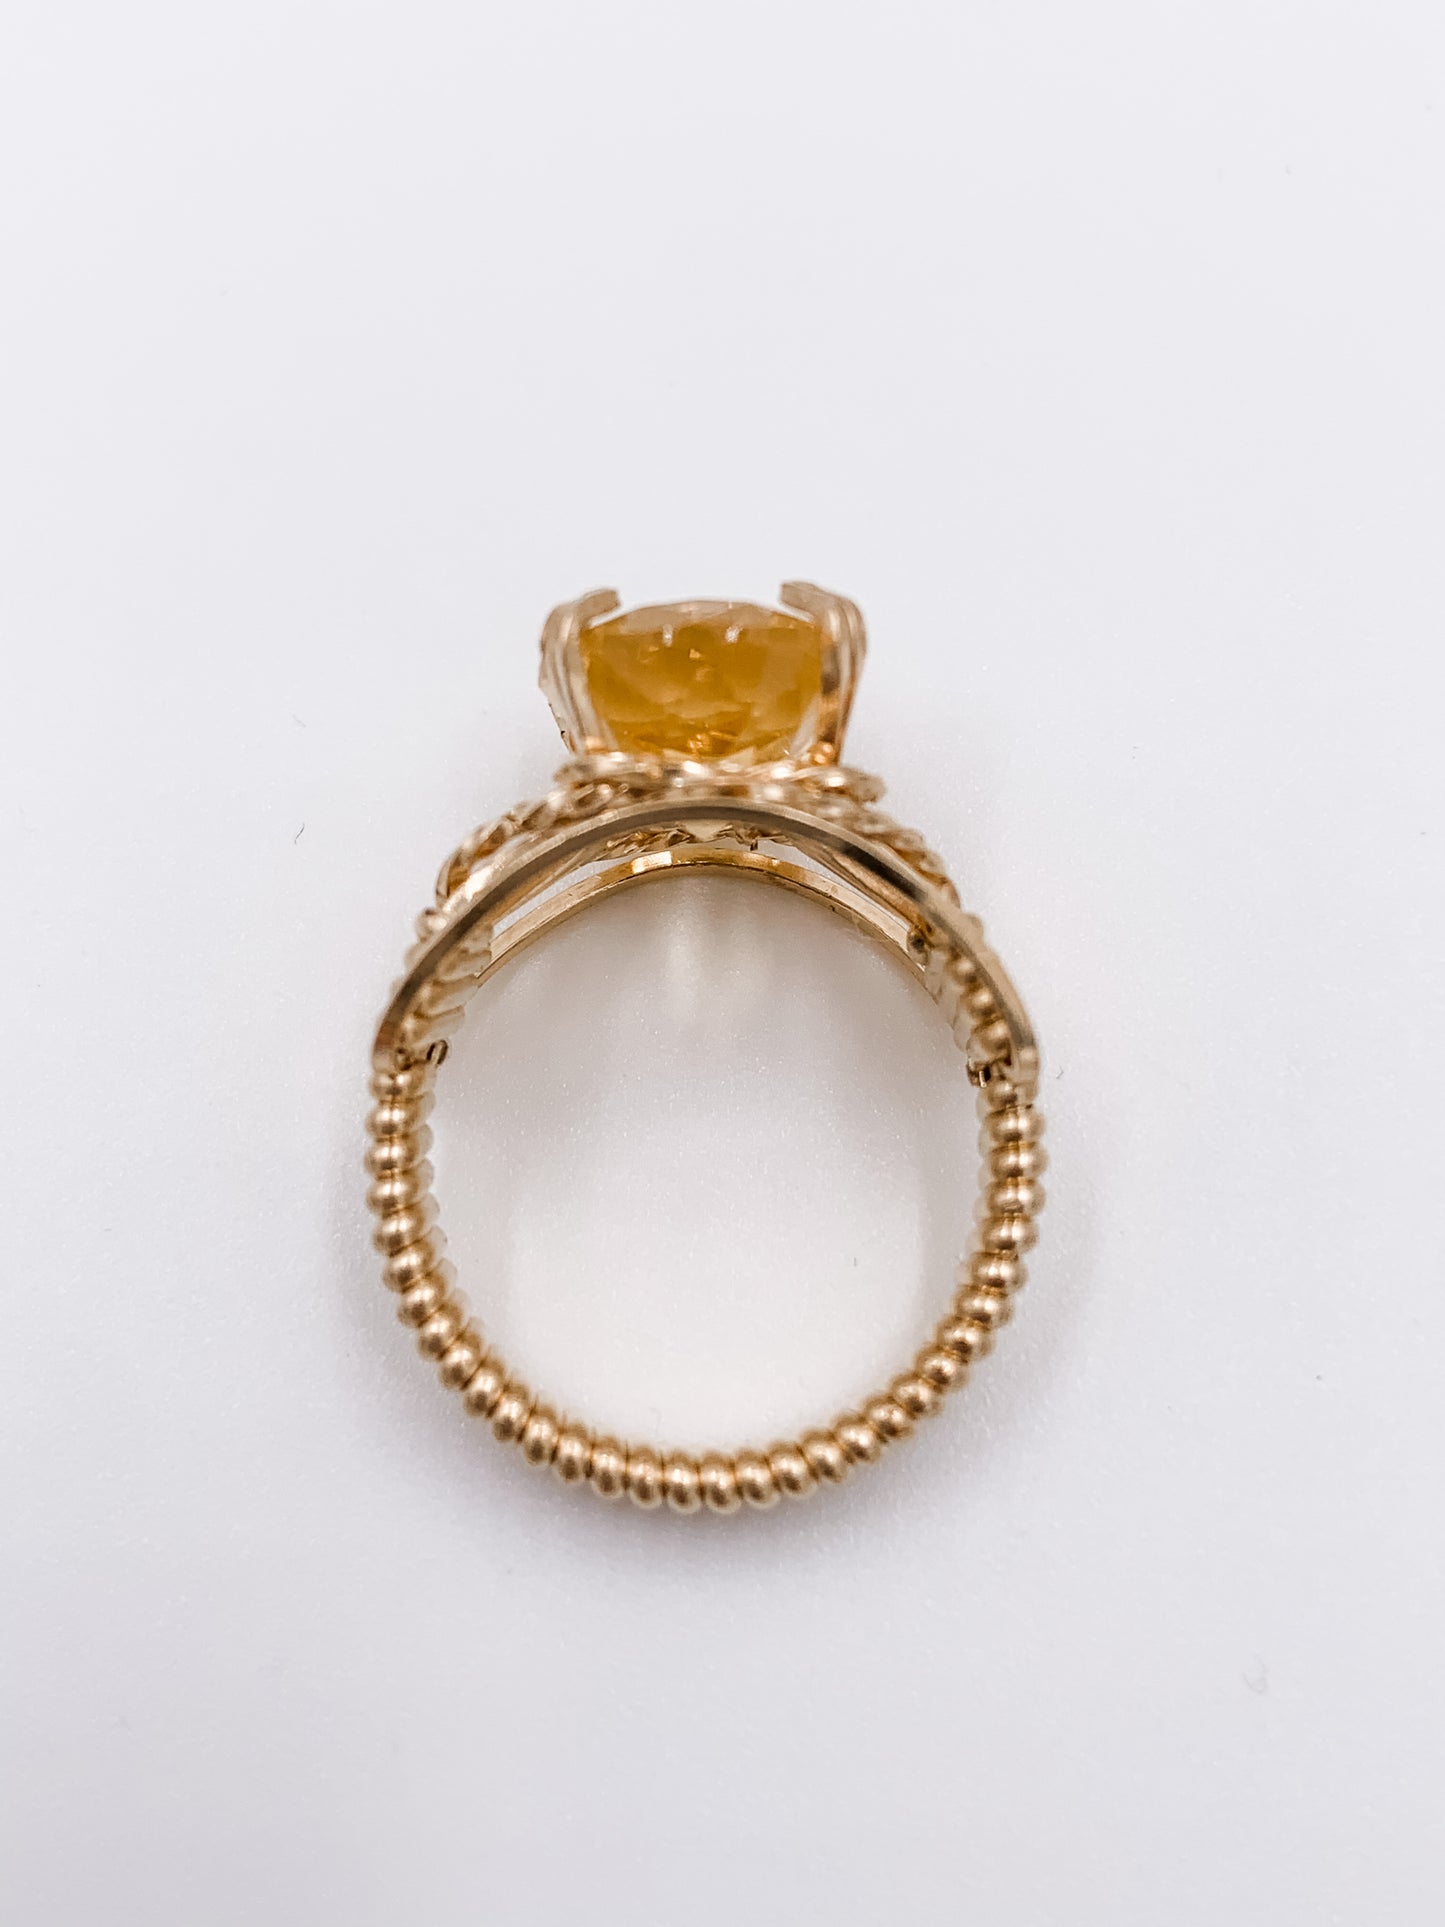 Gemstone Citrine Ring